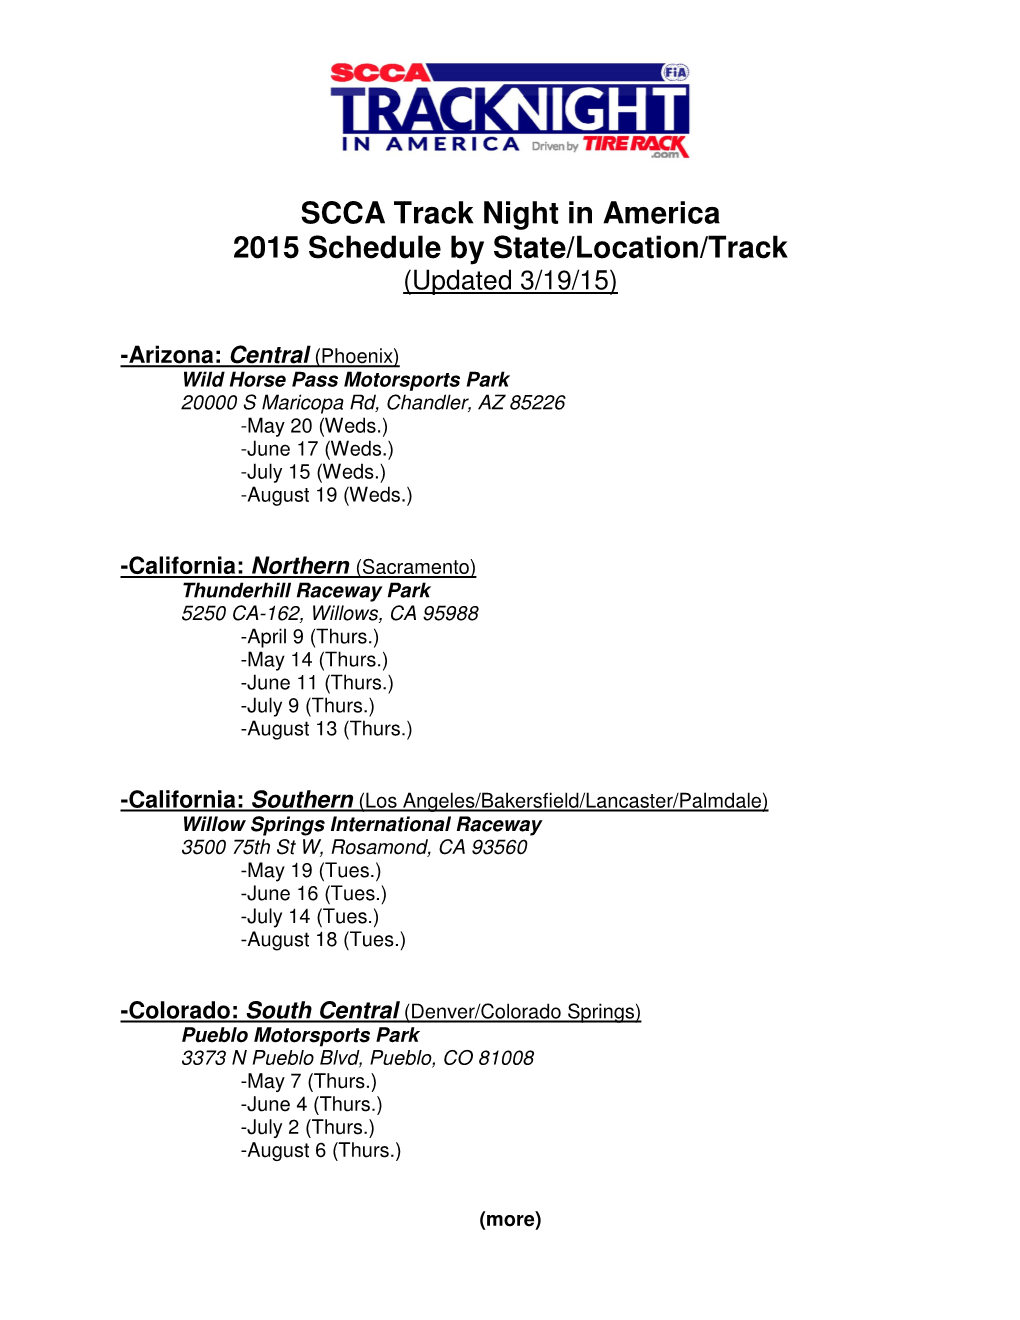 SCCA Track Night in America 2015 Schedule by State/Location/Track (Updated 3/19/15)